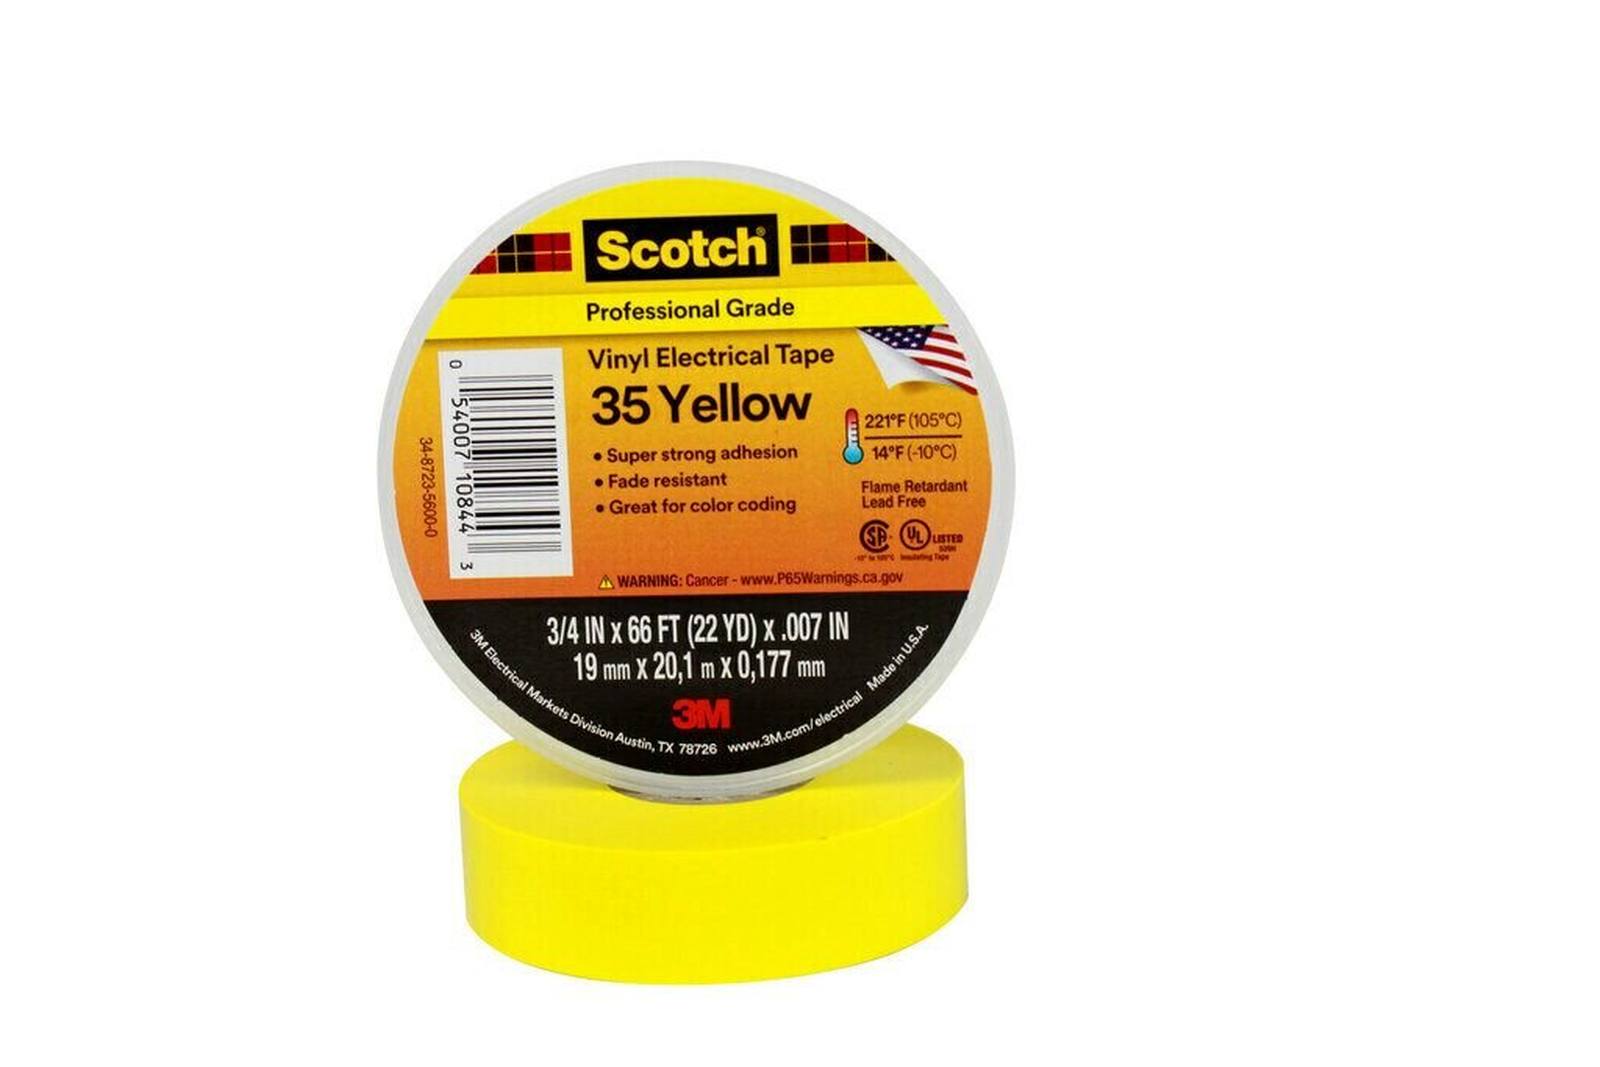  3M Scotch 35 vinyylinen sähköeristysteippi, keltainen, 19 mm x 20 m, 0,18 mm